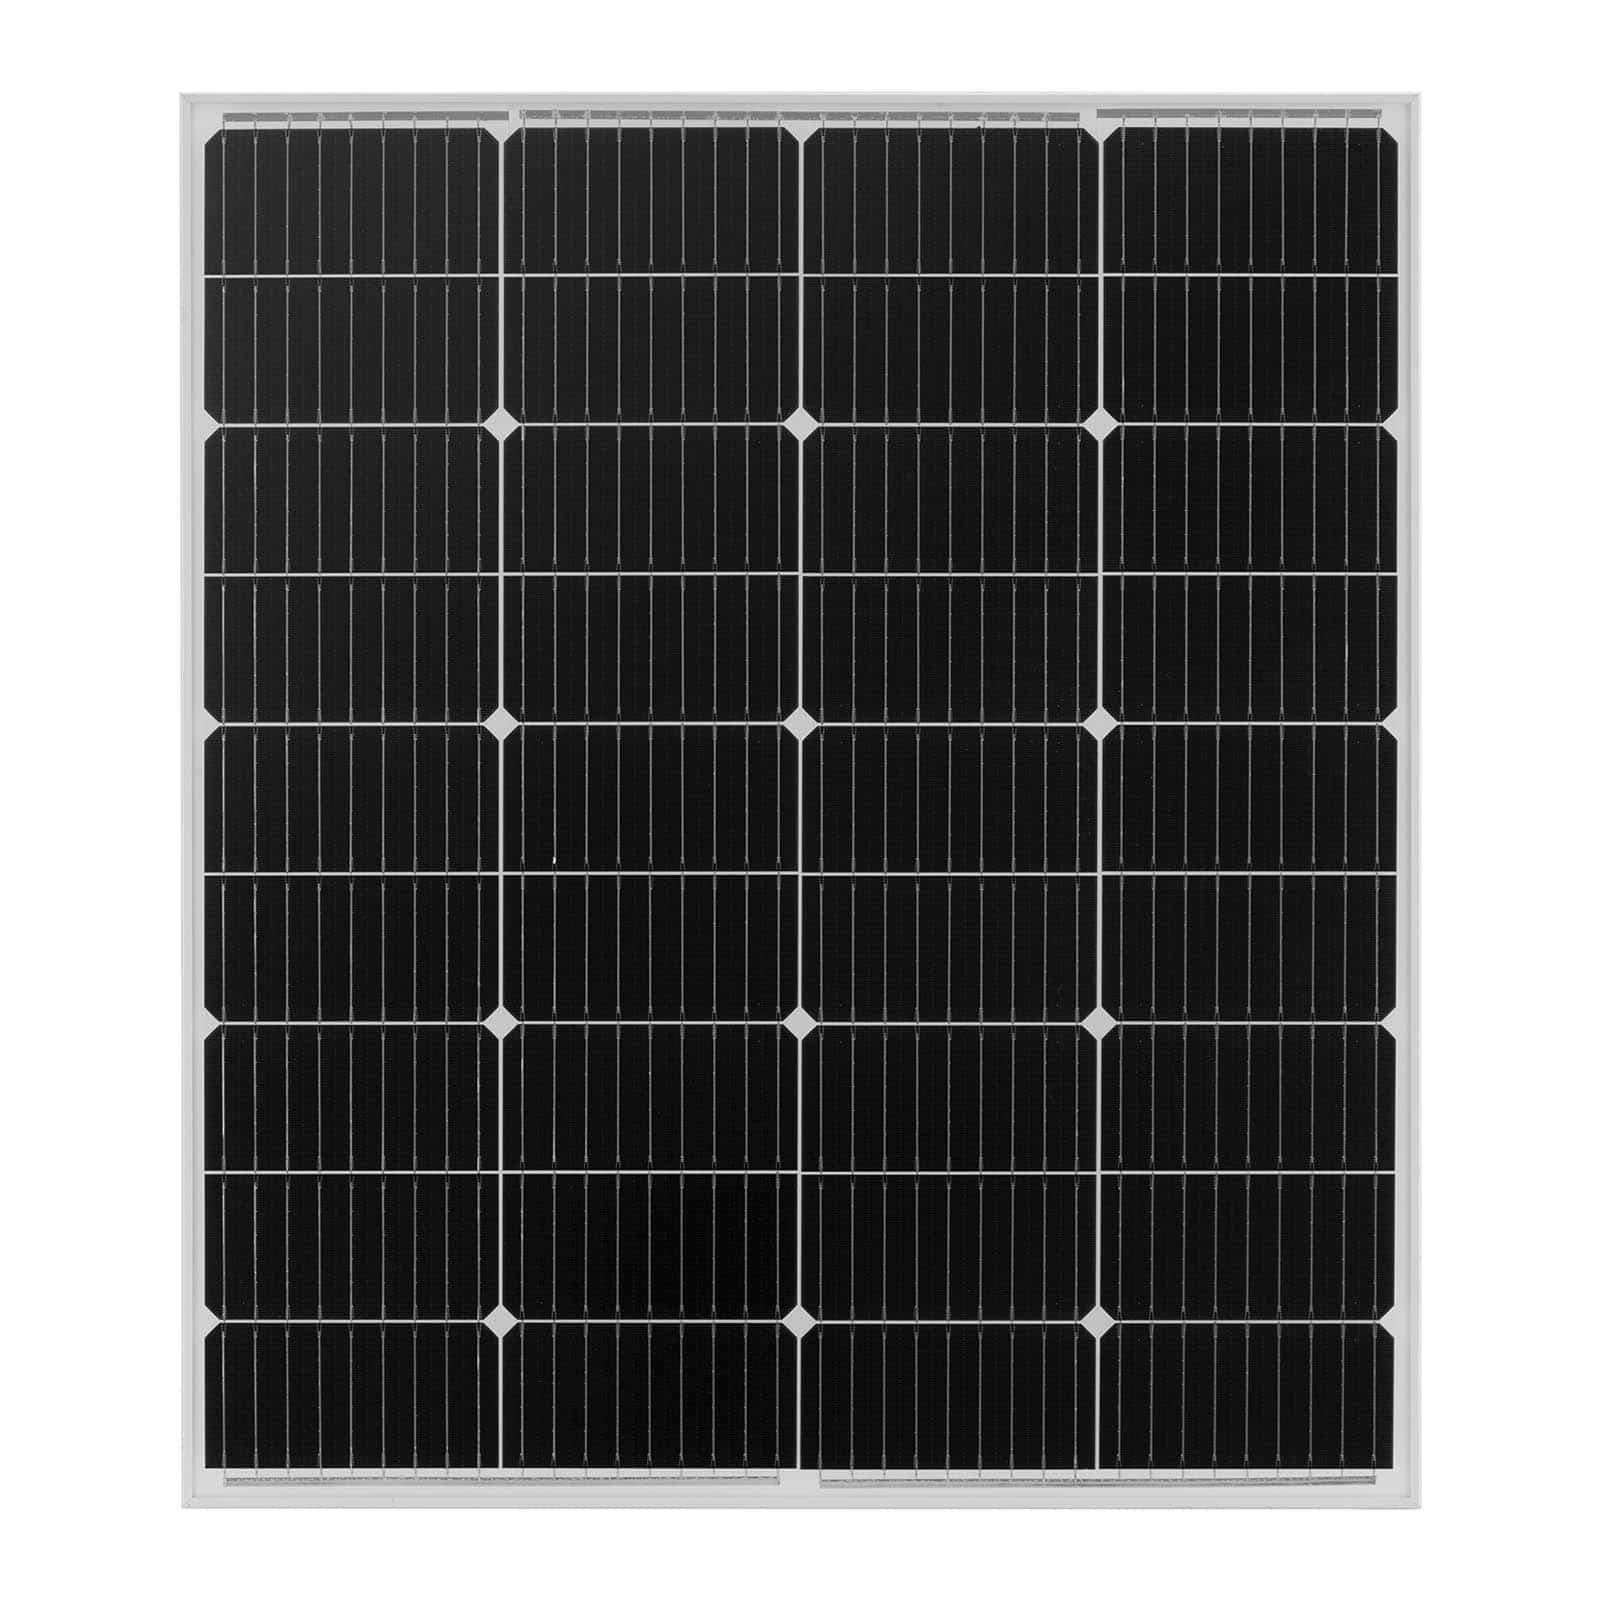 MSW Solarmodul Solarpanel mit Monkristallines 110W Bypass-Technologie